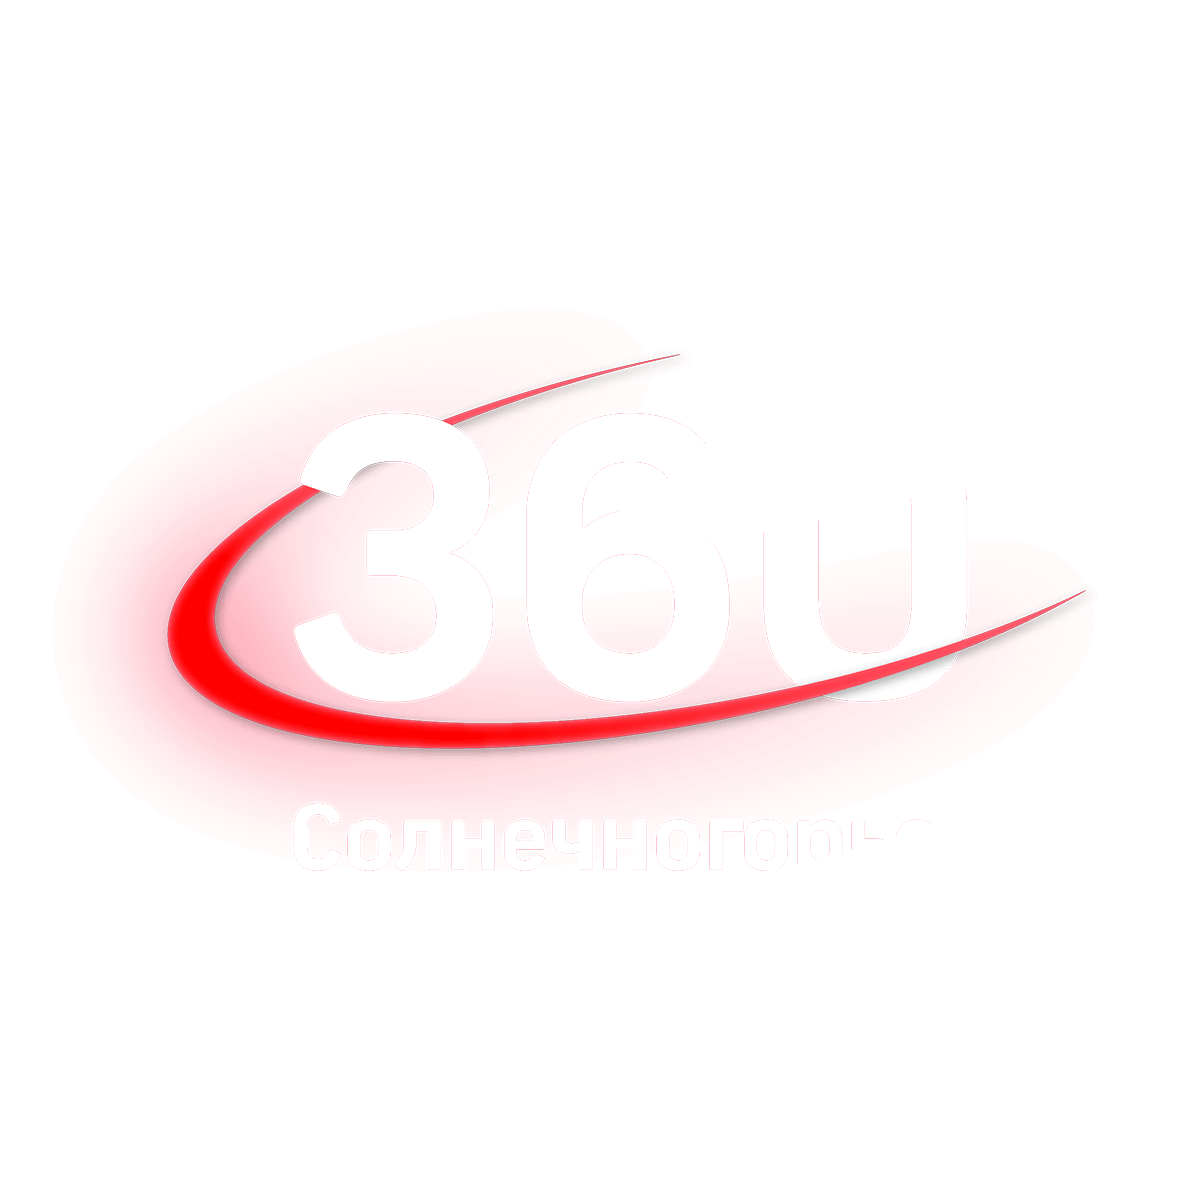 Телеканал "360"